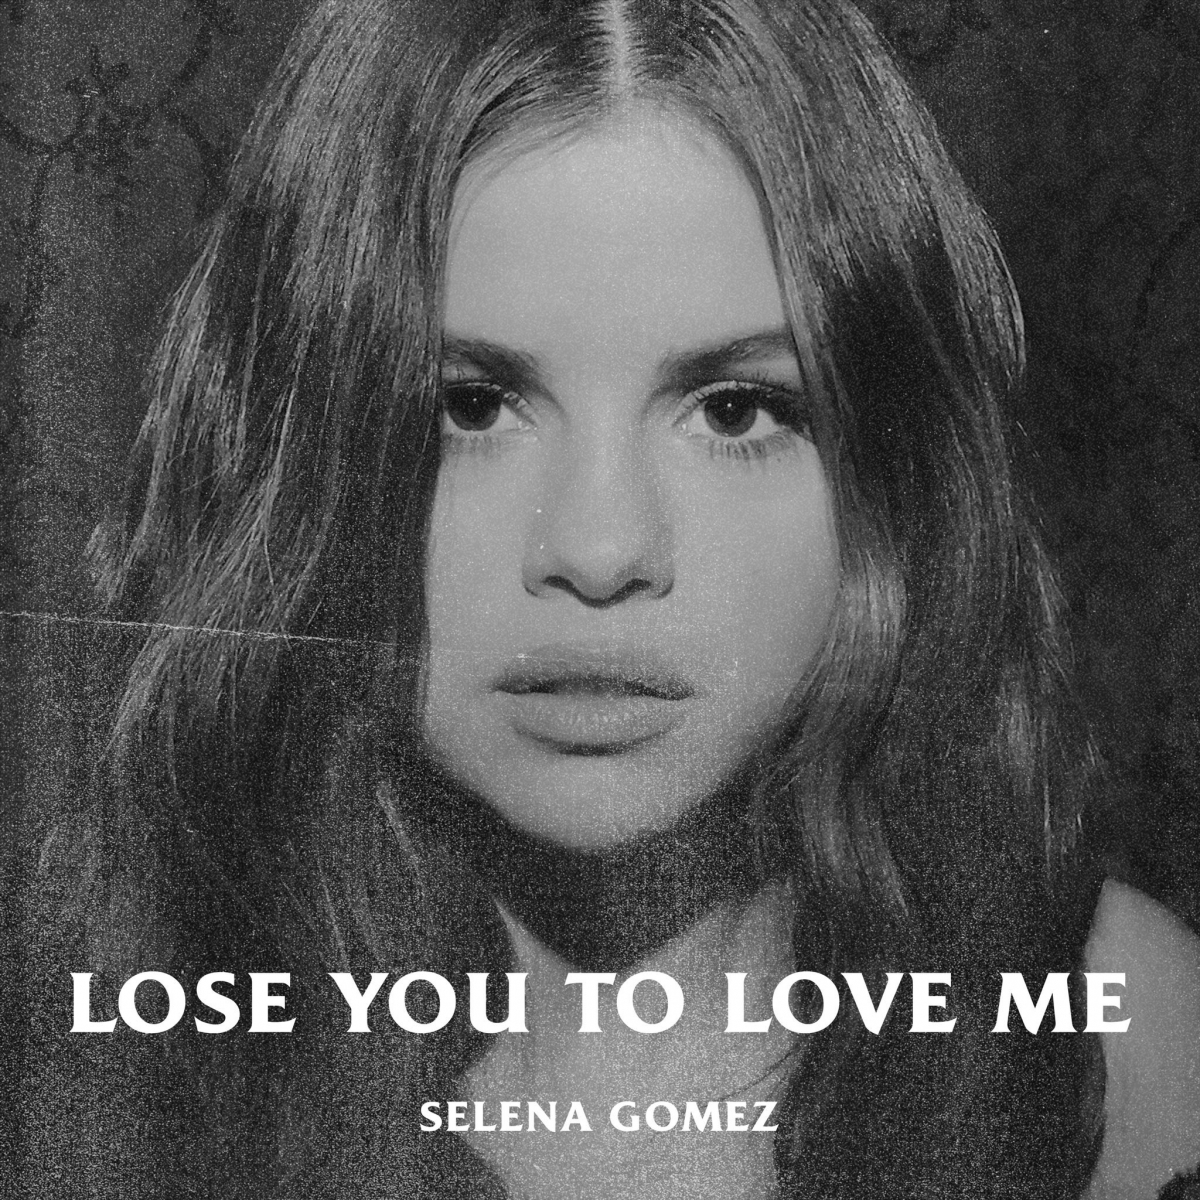 SELENA GOMEZ - Lose You To Love Me